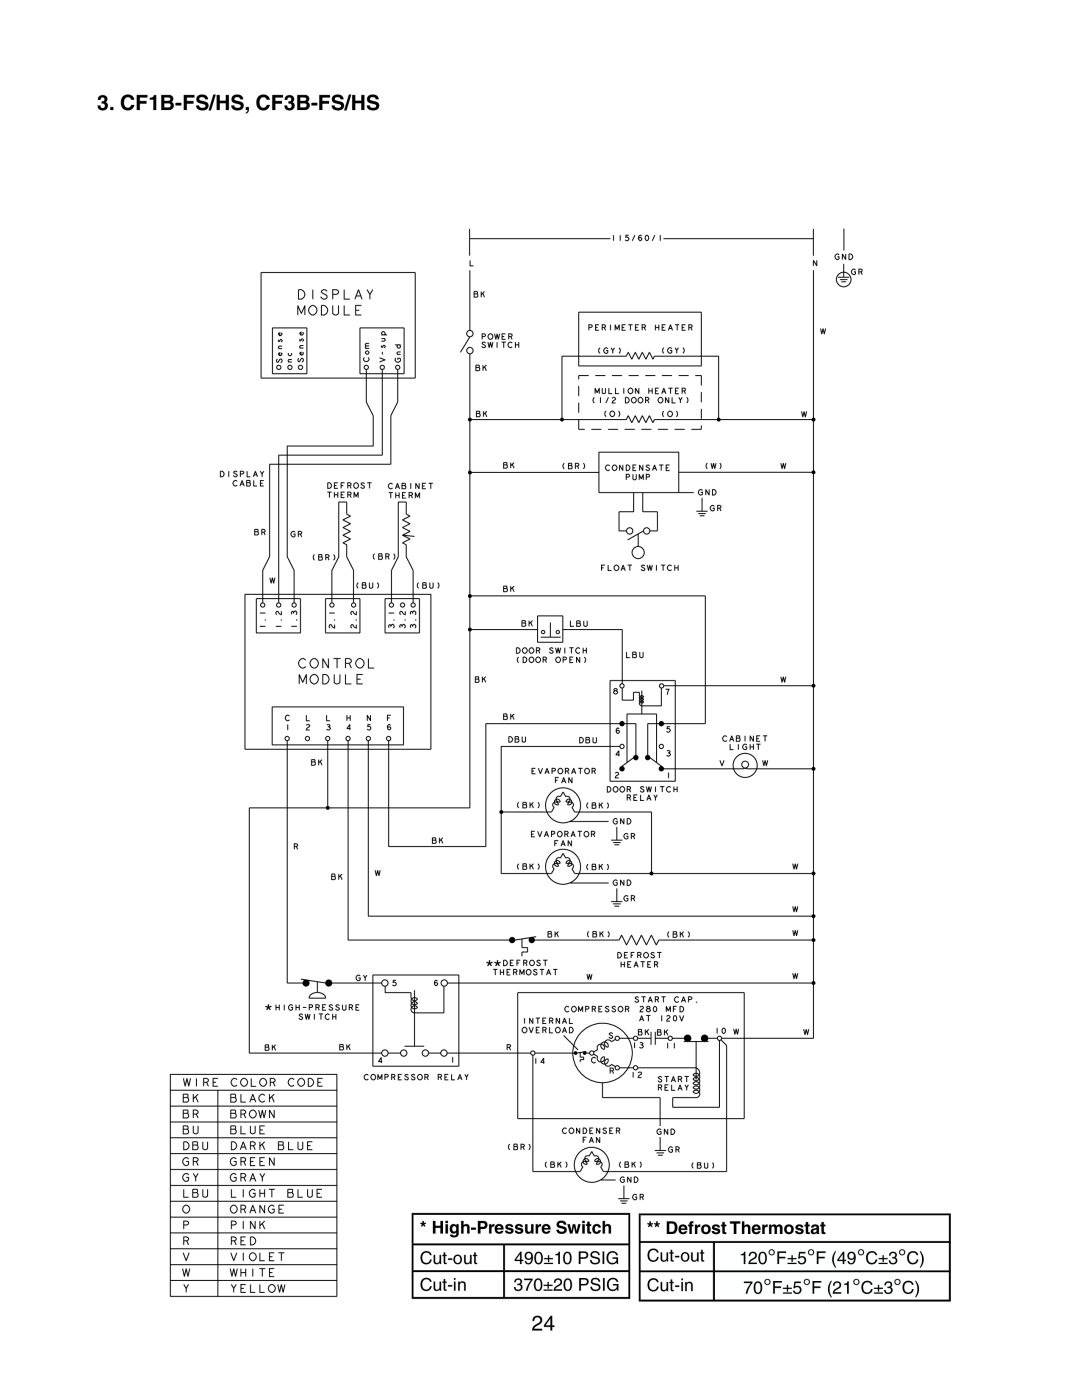 Hoshizaki 73183 service manual 3. CF1B-FS/HS, CF3B-FS/HS, High-Pressure Switch, Defrost Thermostat 